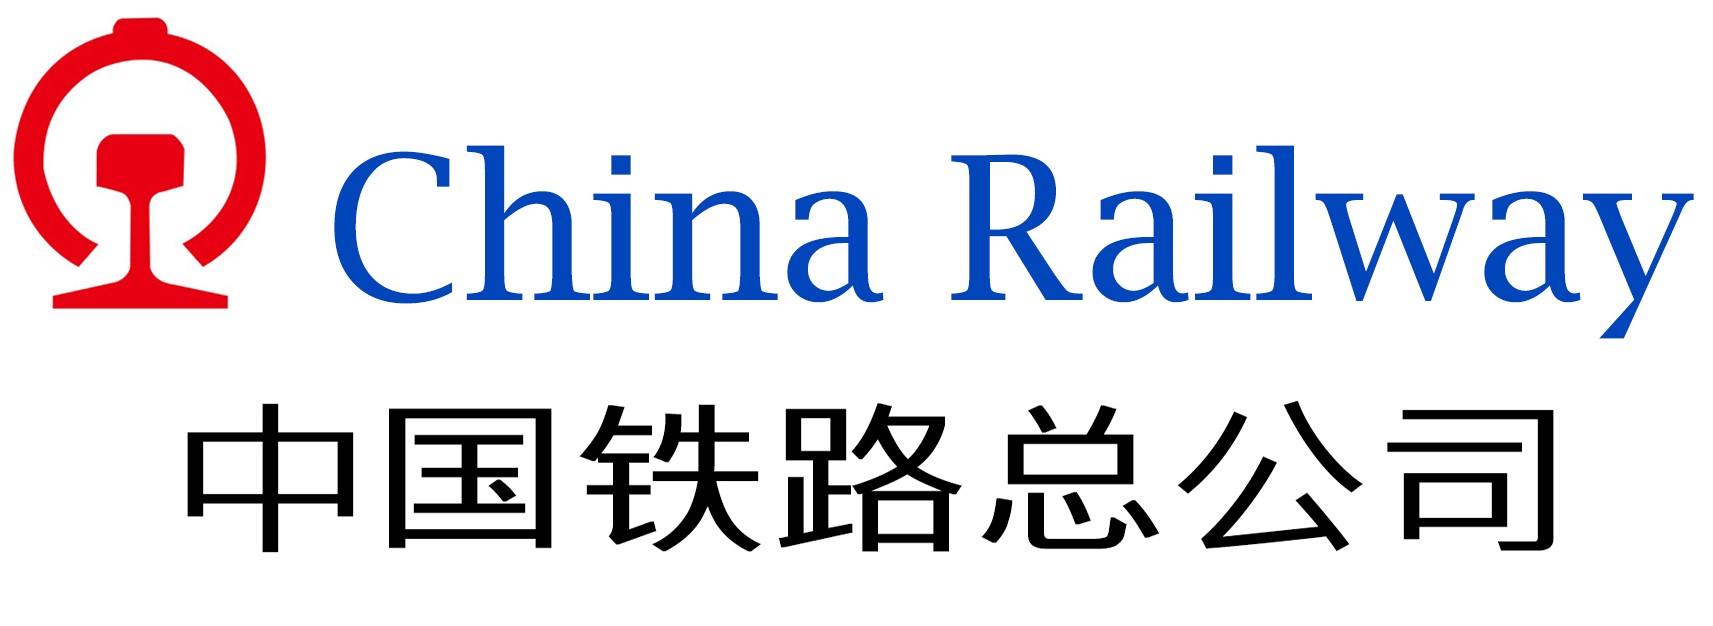 Chinese Railways Representative Office in Europe